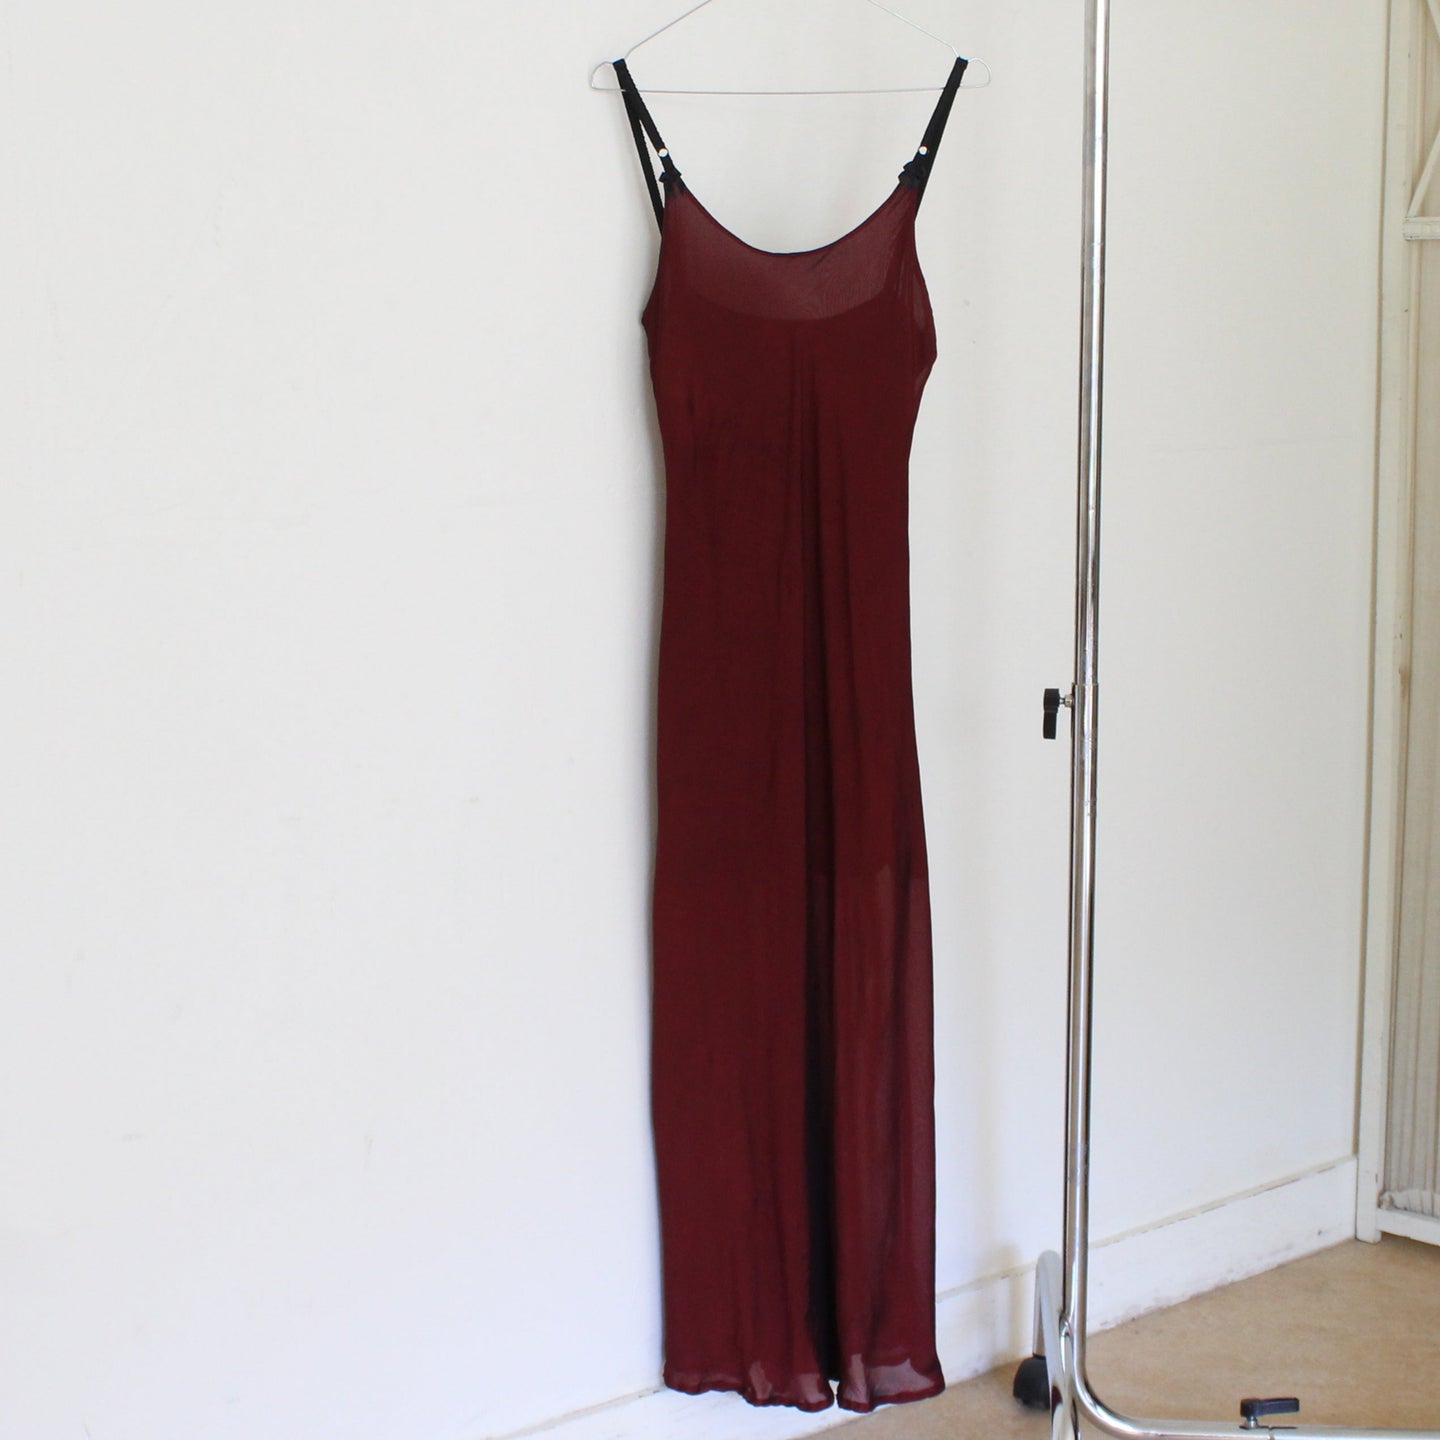 Vintage wine red long slip dress, size M/L